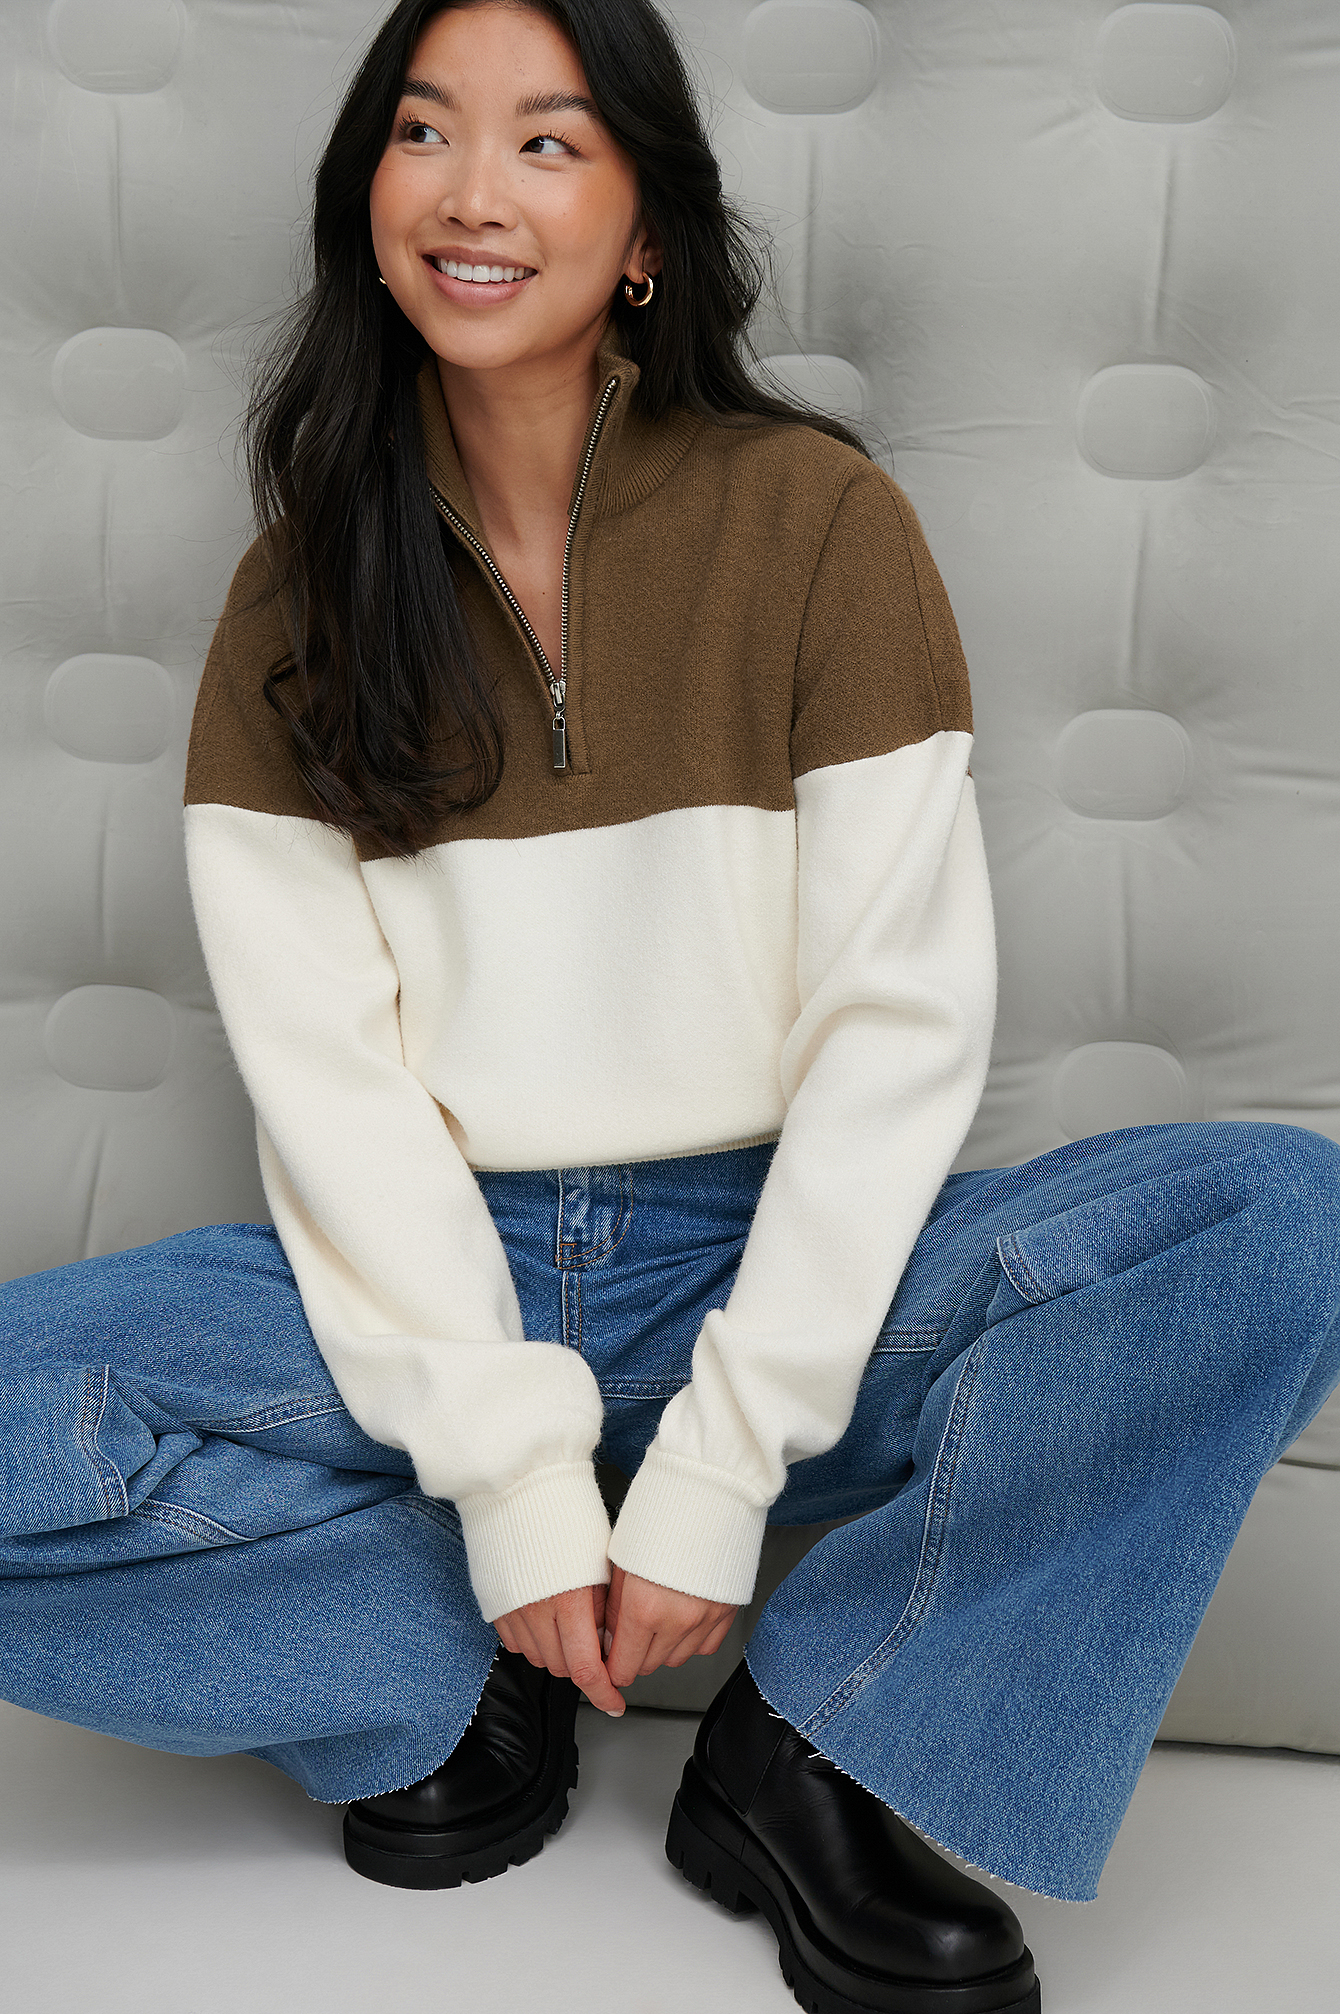 Rianne Meijer x NA-KD Colourblock Zip Sweater - Brown